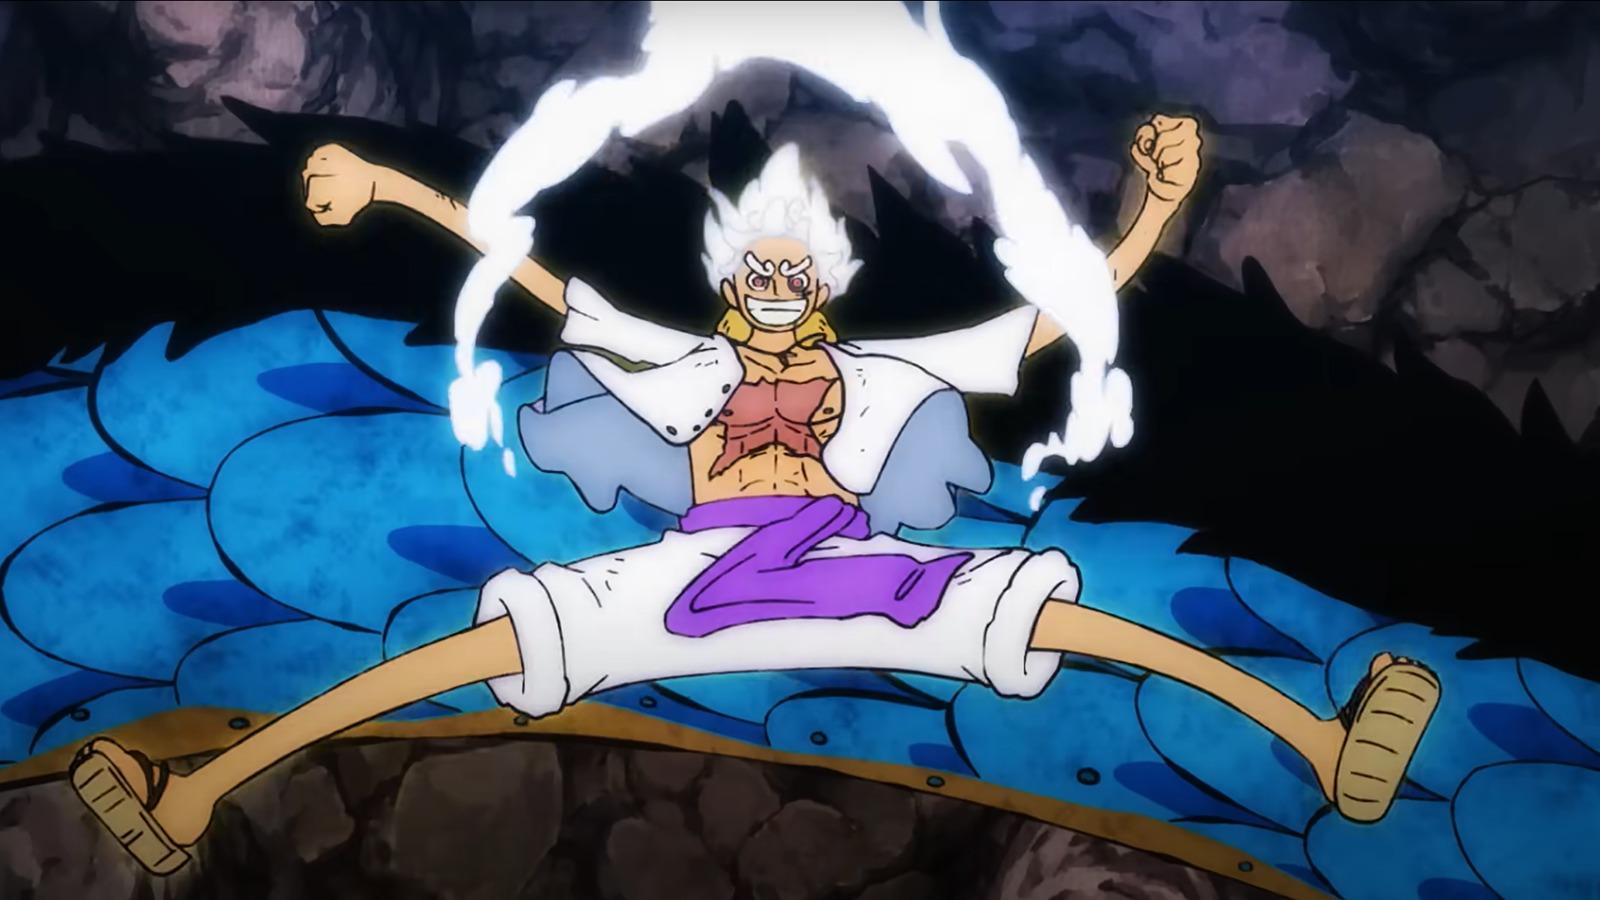 One Piece Luffy's gear 5 anime adaptation